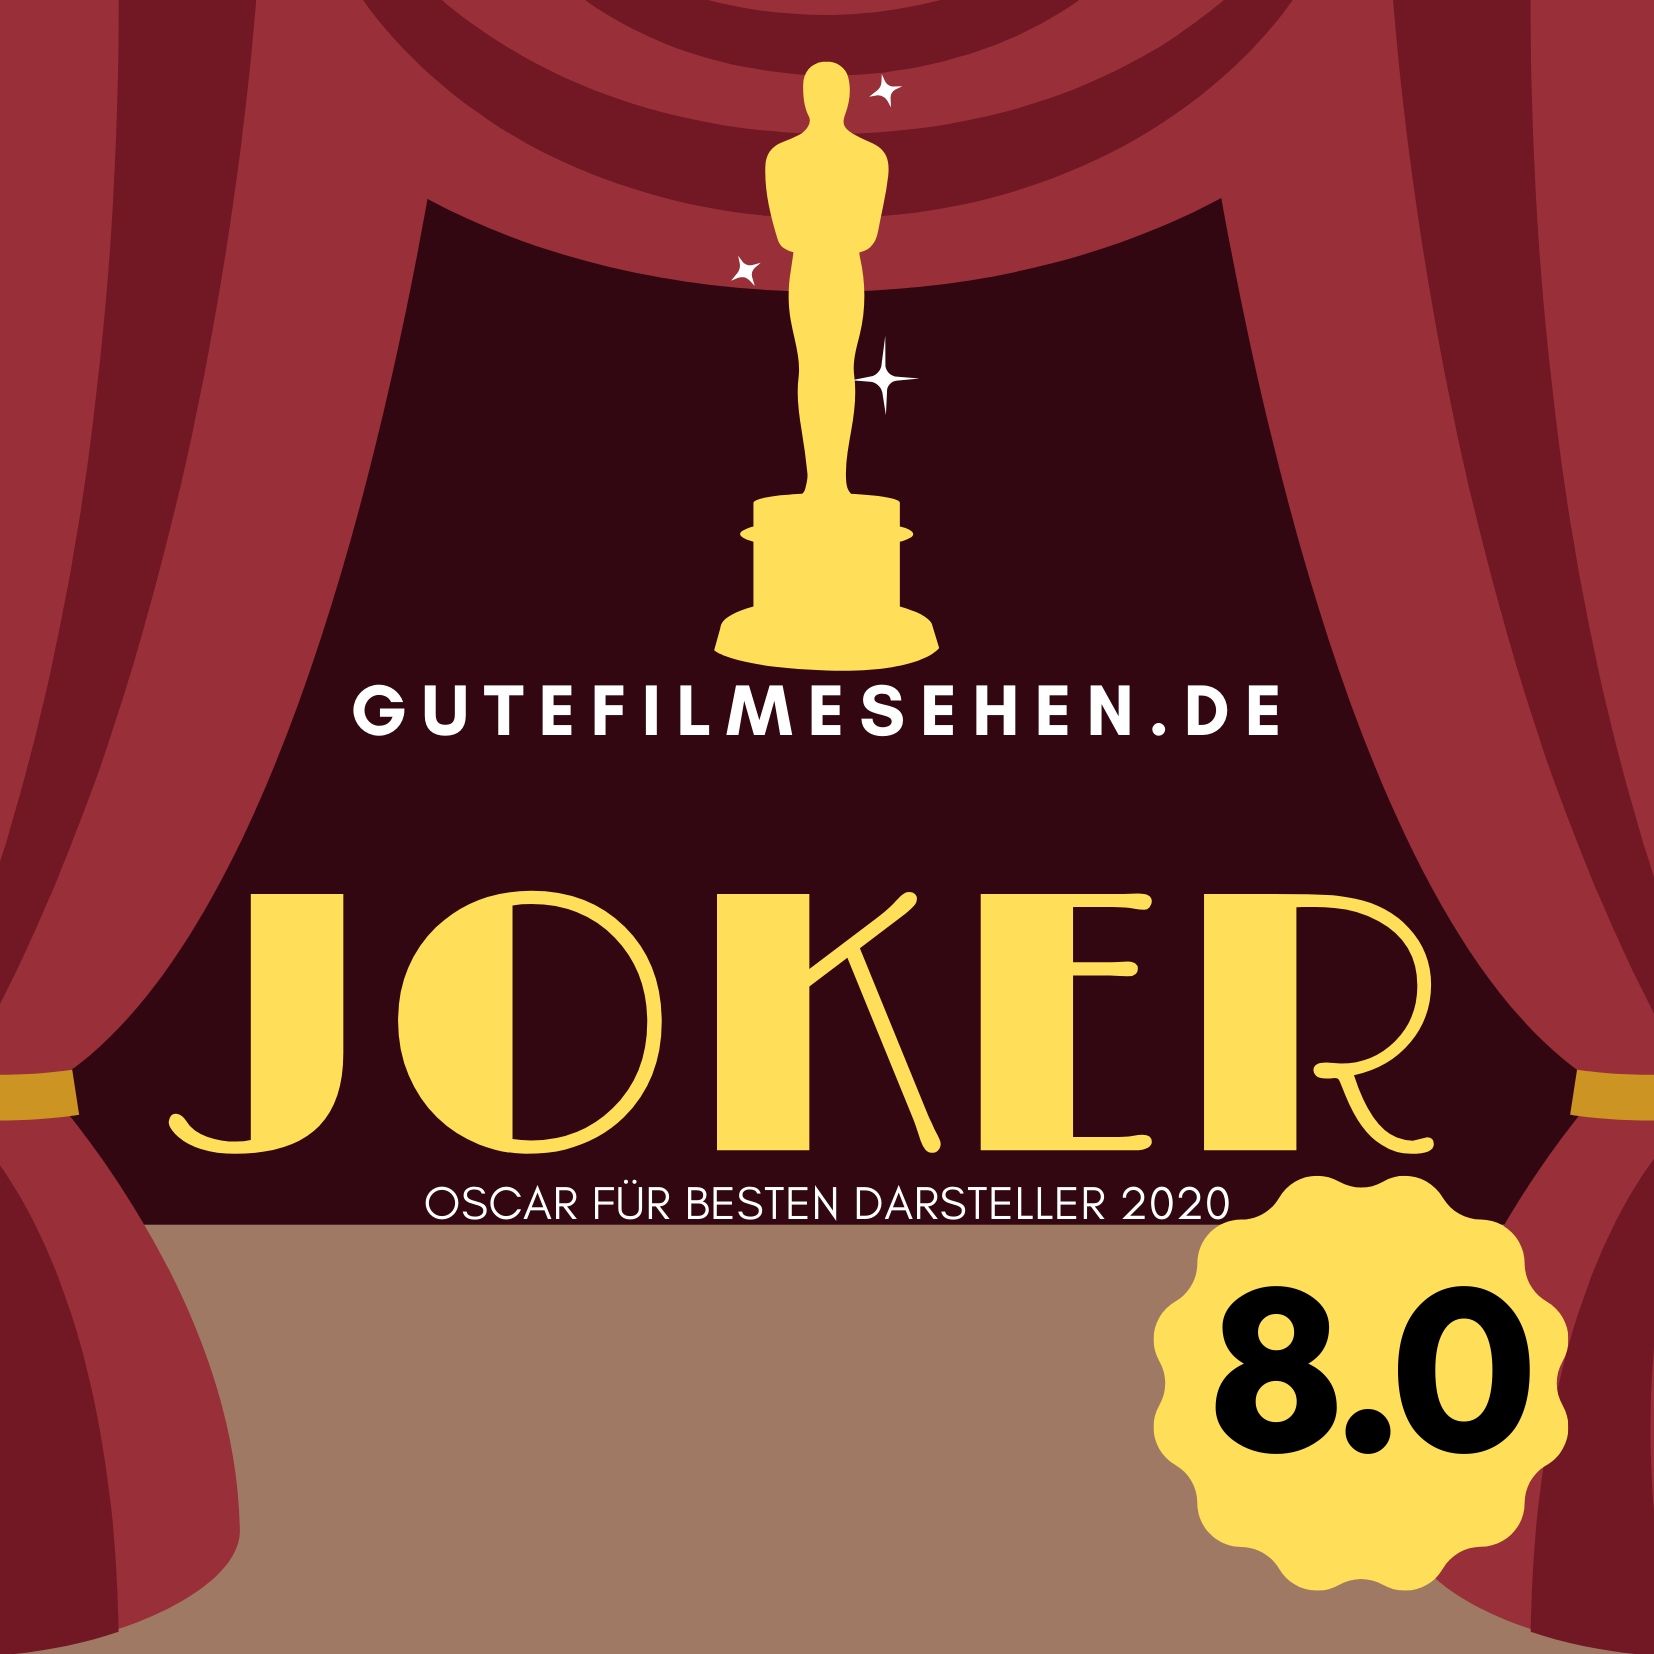 Gute Filme sehen 2019: JOKER mit Joaquin Phoenix [Podcast]